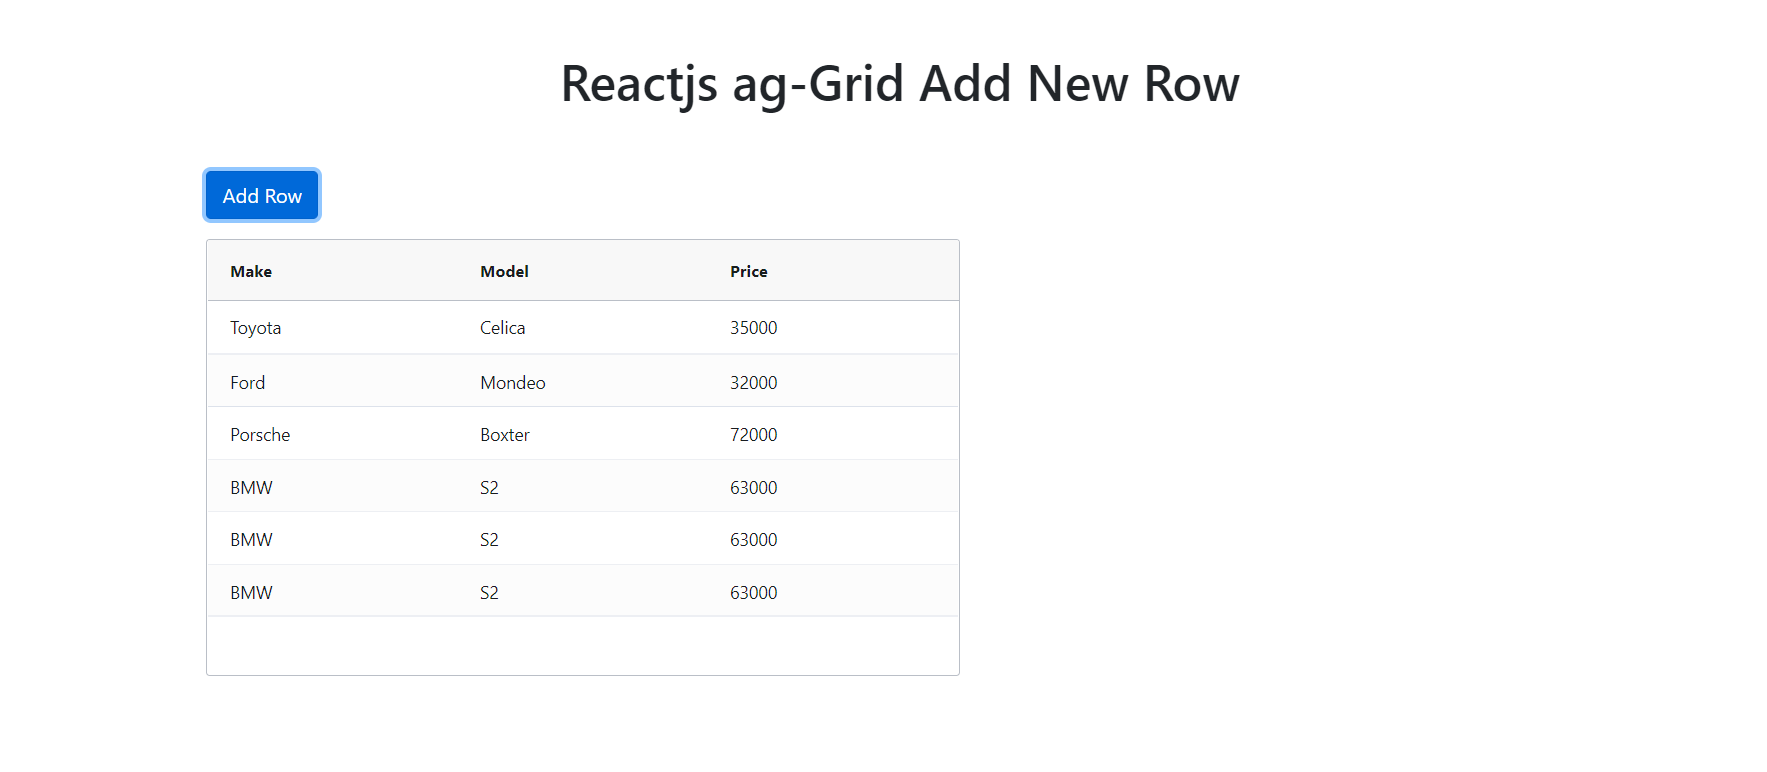 Reactjs aggrid add new row